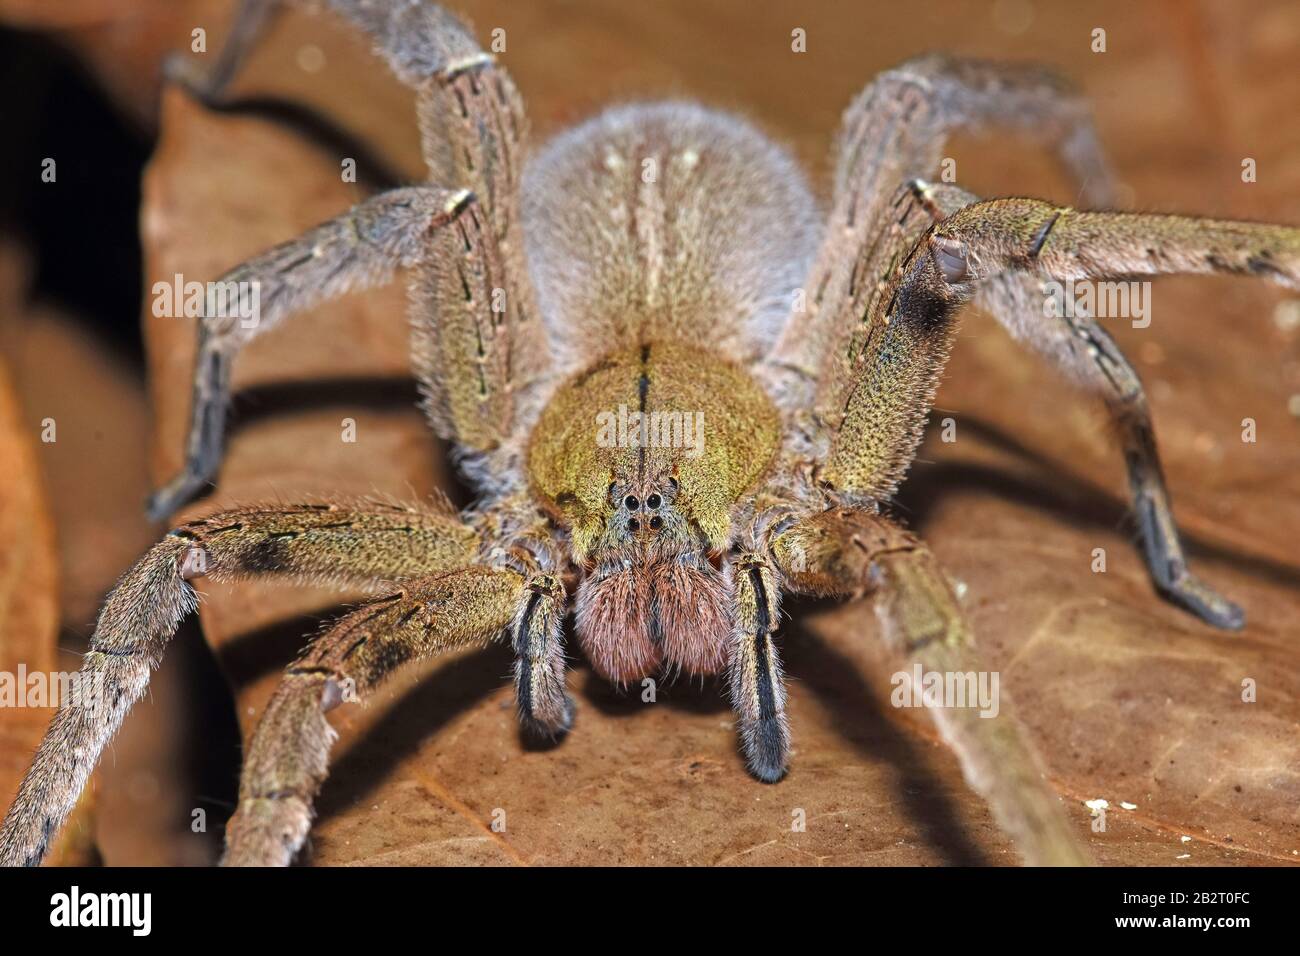 Brazilian wandering Spider Stock Photo